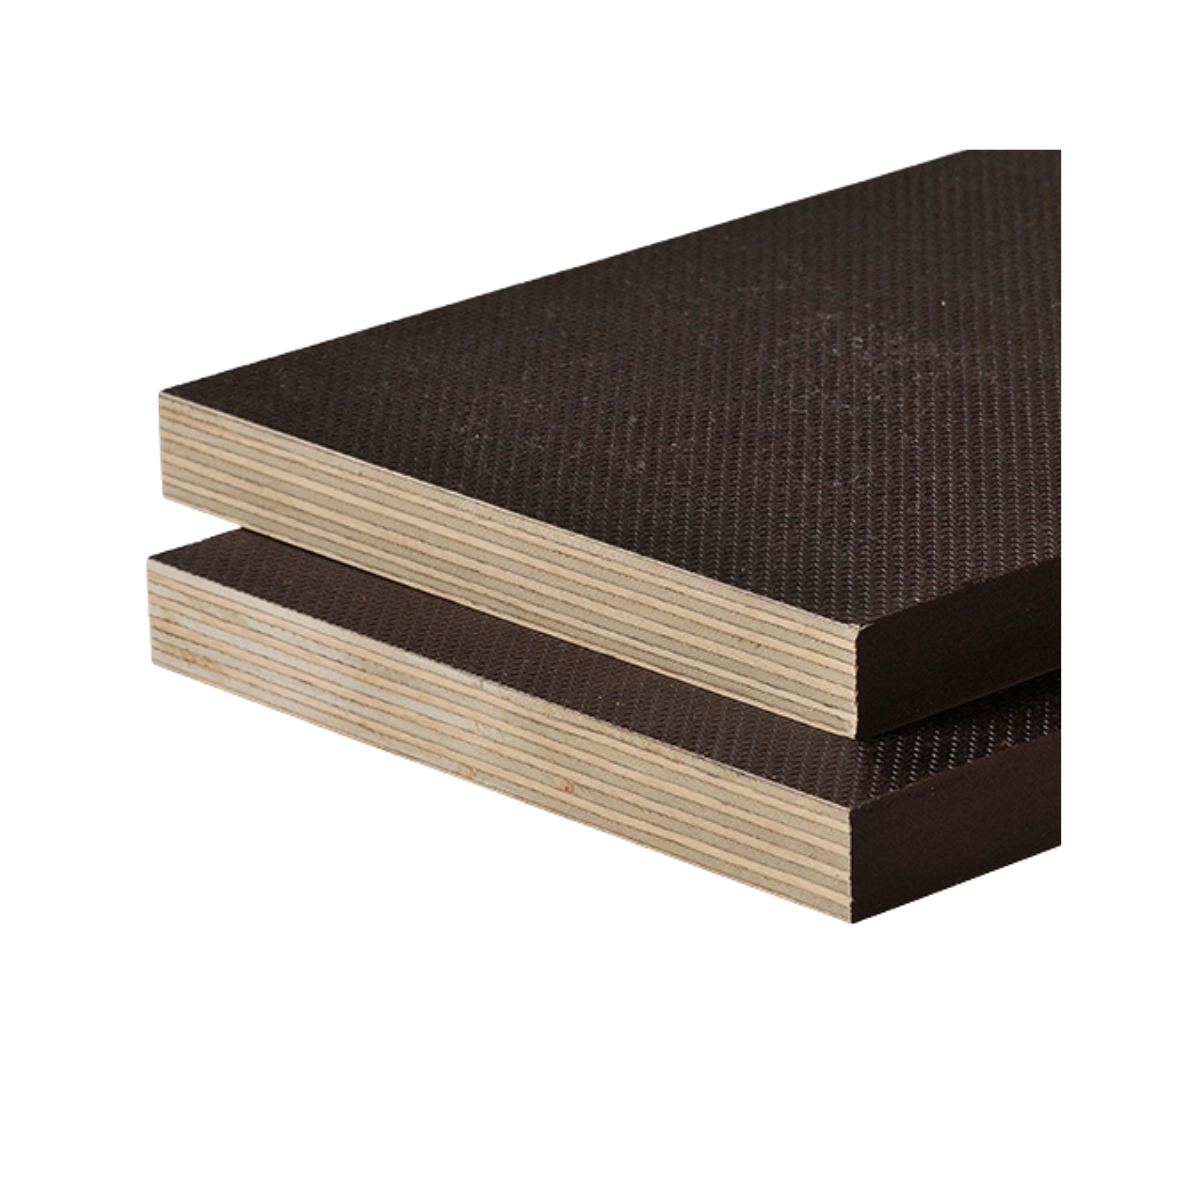 Antiskid playwood - Anti-slip TEGO formwork plywood 15 mm thickness, 1250 x 2500 mm class A, https:maxbau.ro